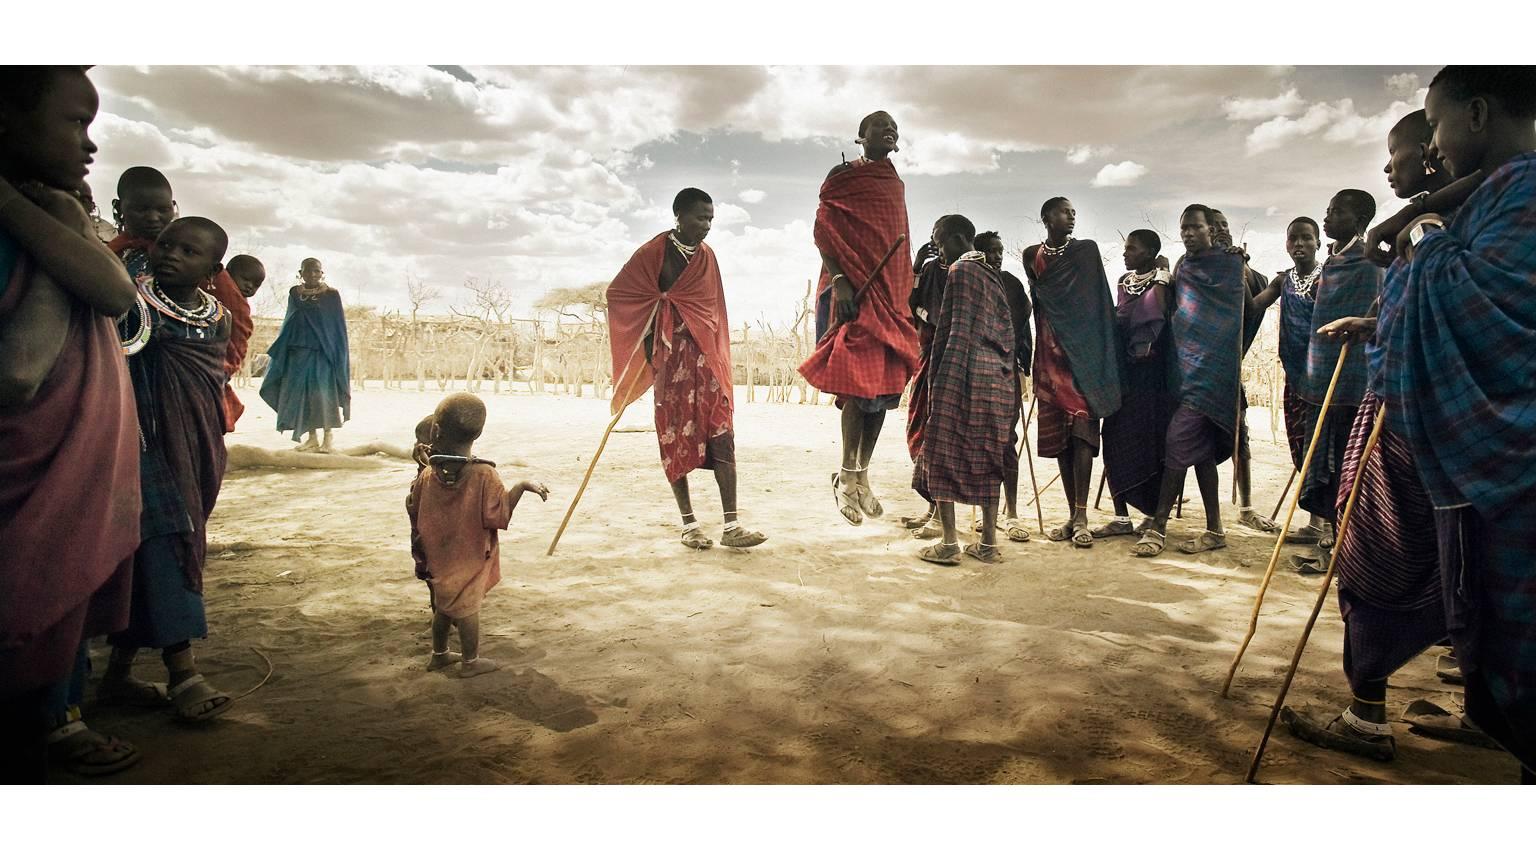 Chris Gordaneer Figurative Photograph - Masai Tribe